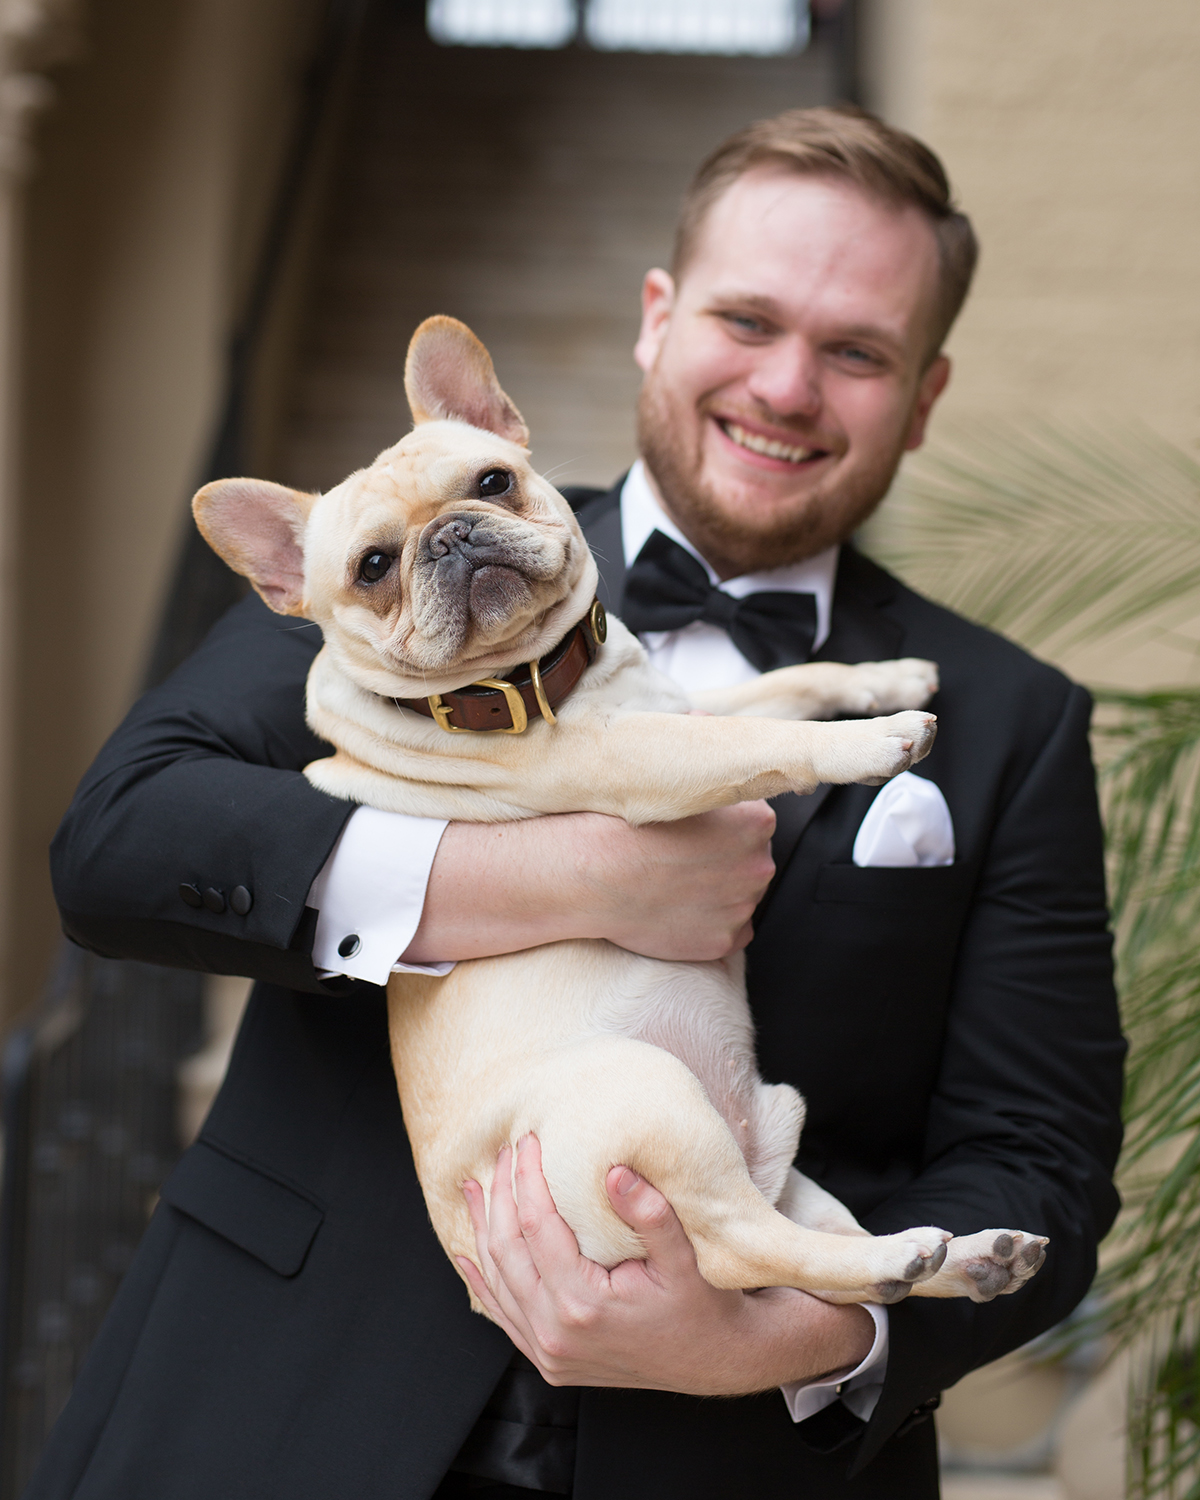 dogs in wedding photos - pug - bulldog - cute photography